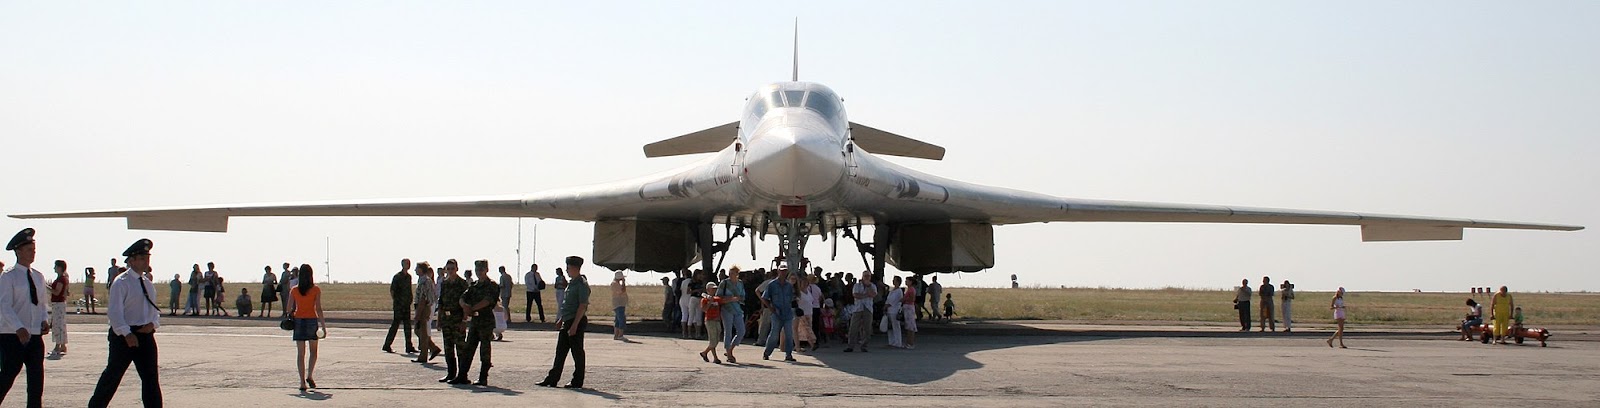 The Magnificent Tupolev Tu-160